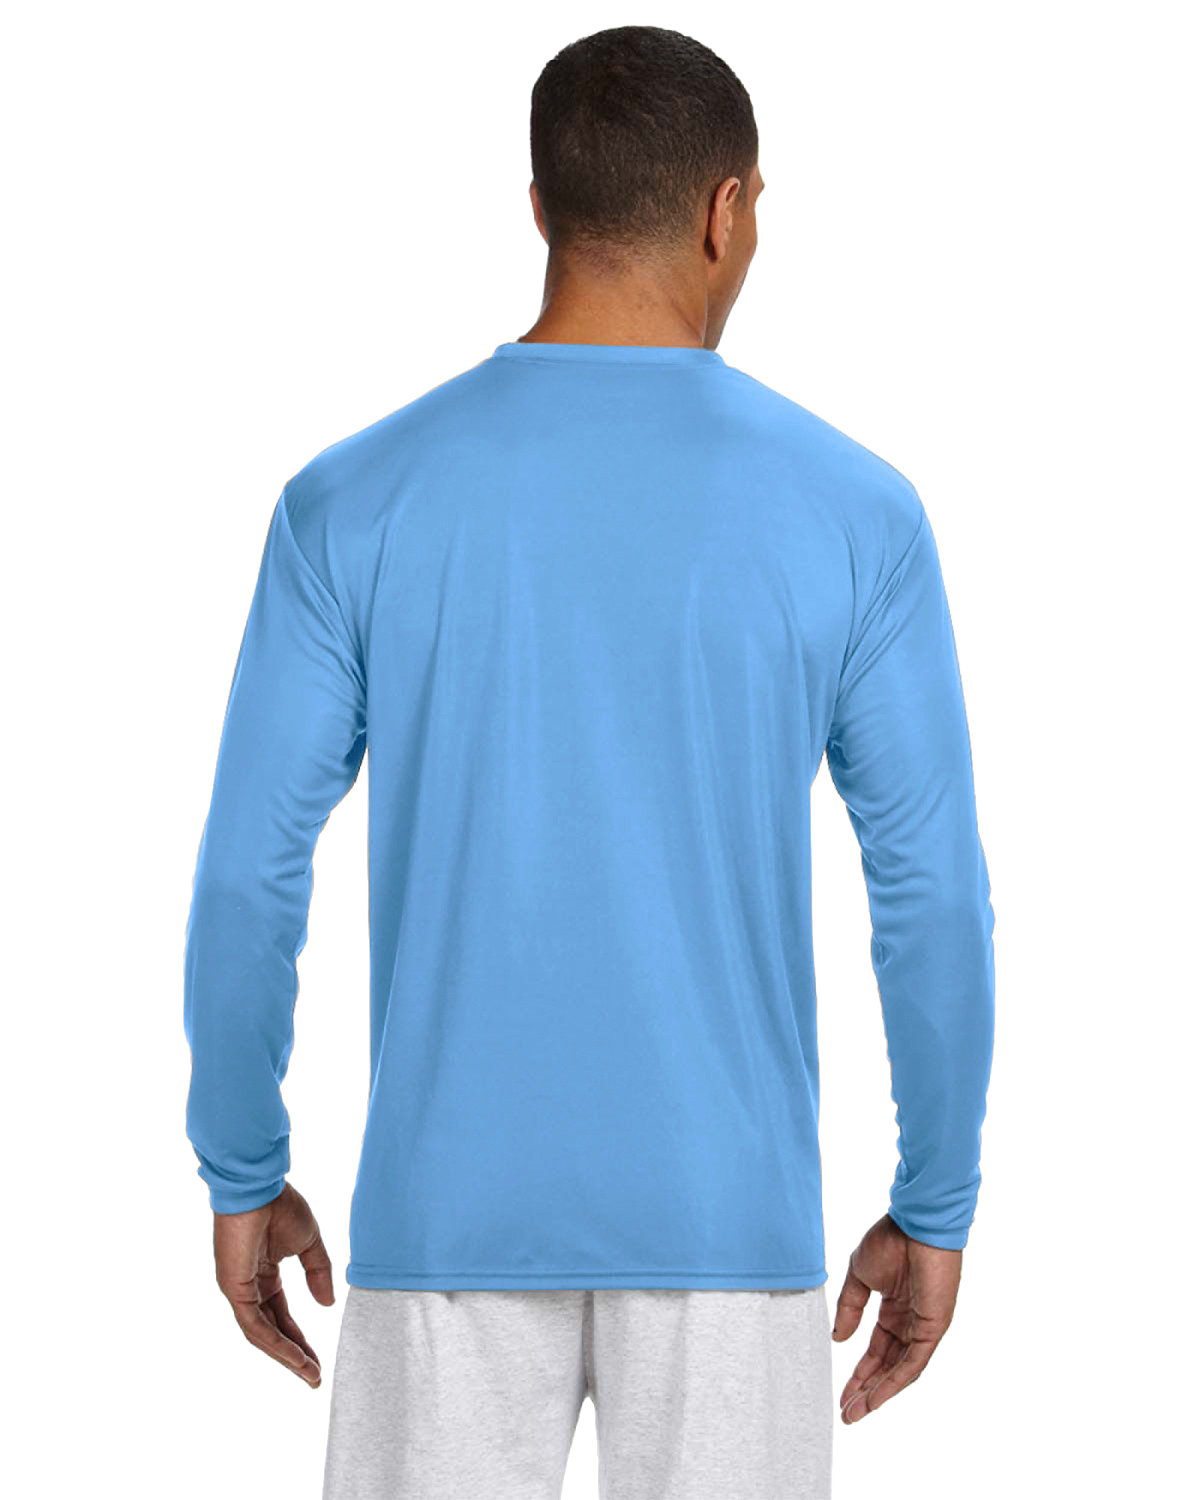 A4 Men's Cooling Performance Long Sleeve T-Shirt Dri-Fit L/S Tee Shirt  S-3XL | eBay